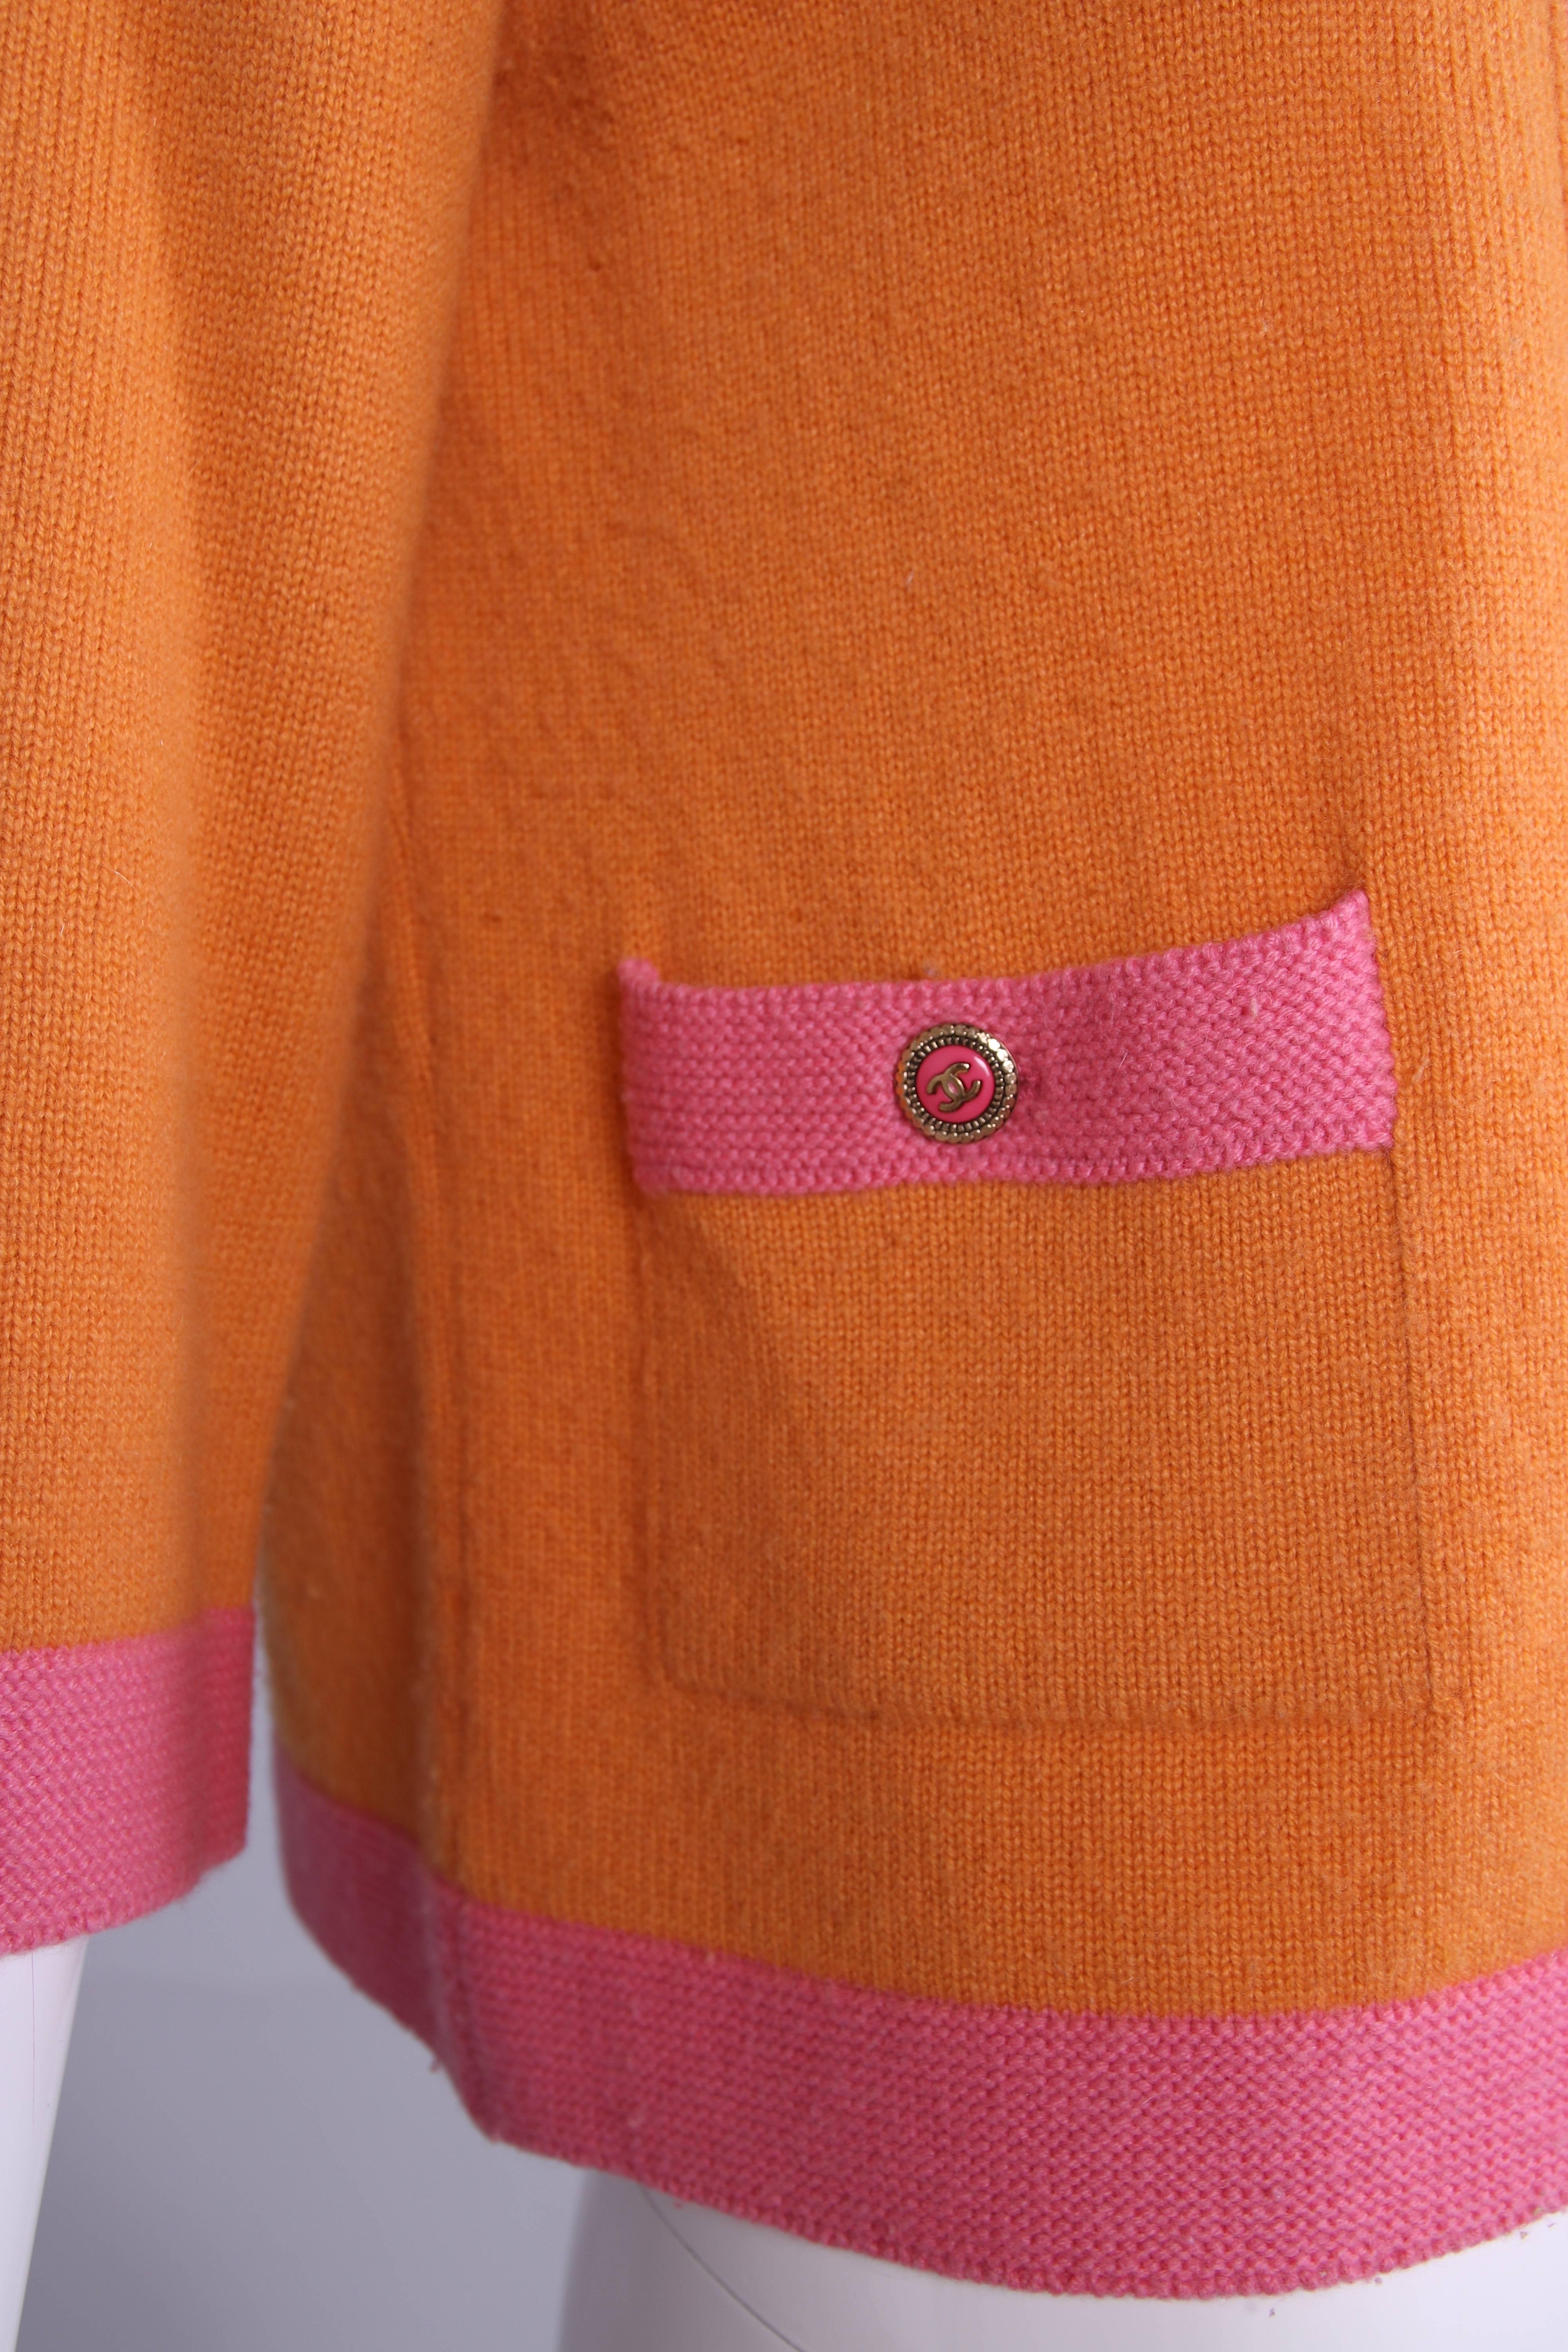 2007 Chanel Orange Cashmere Cardigan W/Chanel CC Logo Buttons & Pink Trim 1